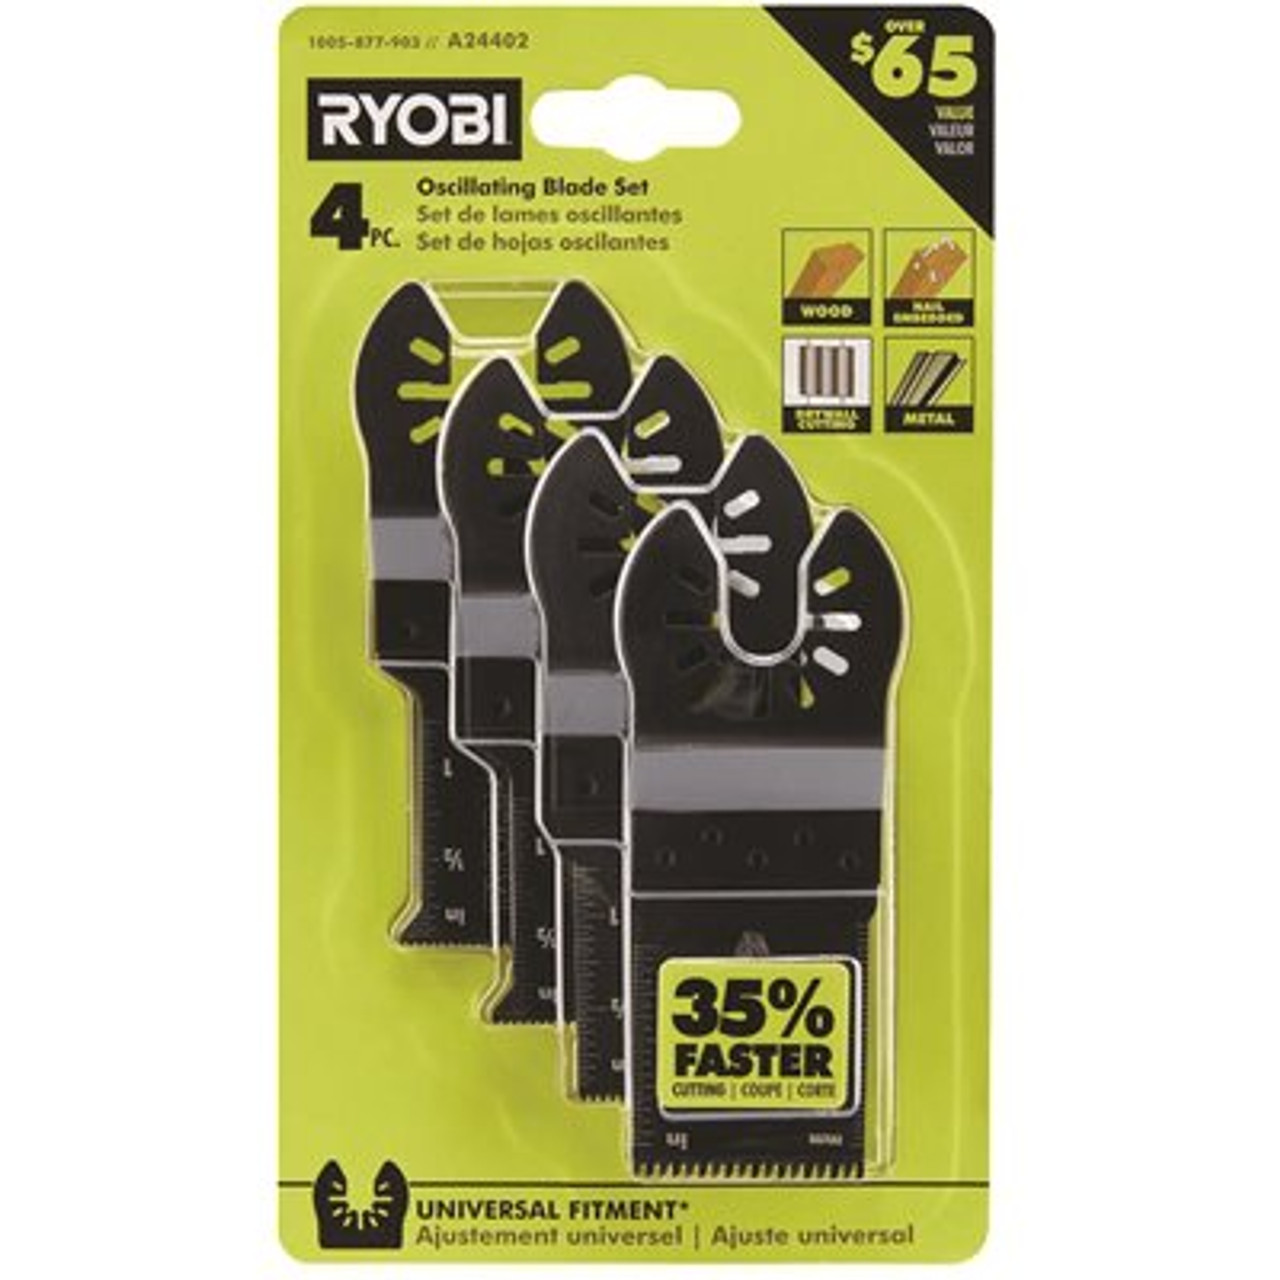 Ryobi 4-Piece Wood And Metal Oscillating Multi-Tool Blade Set